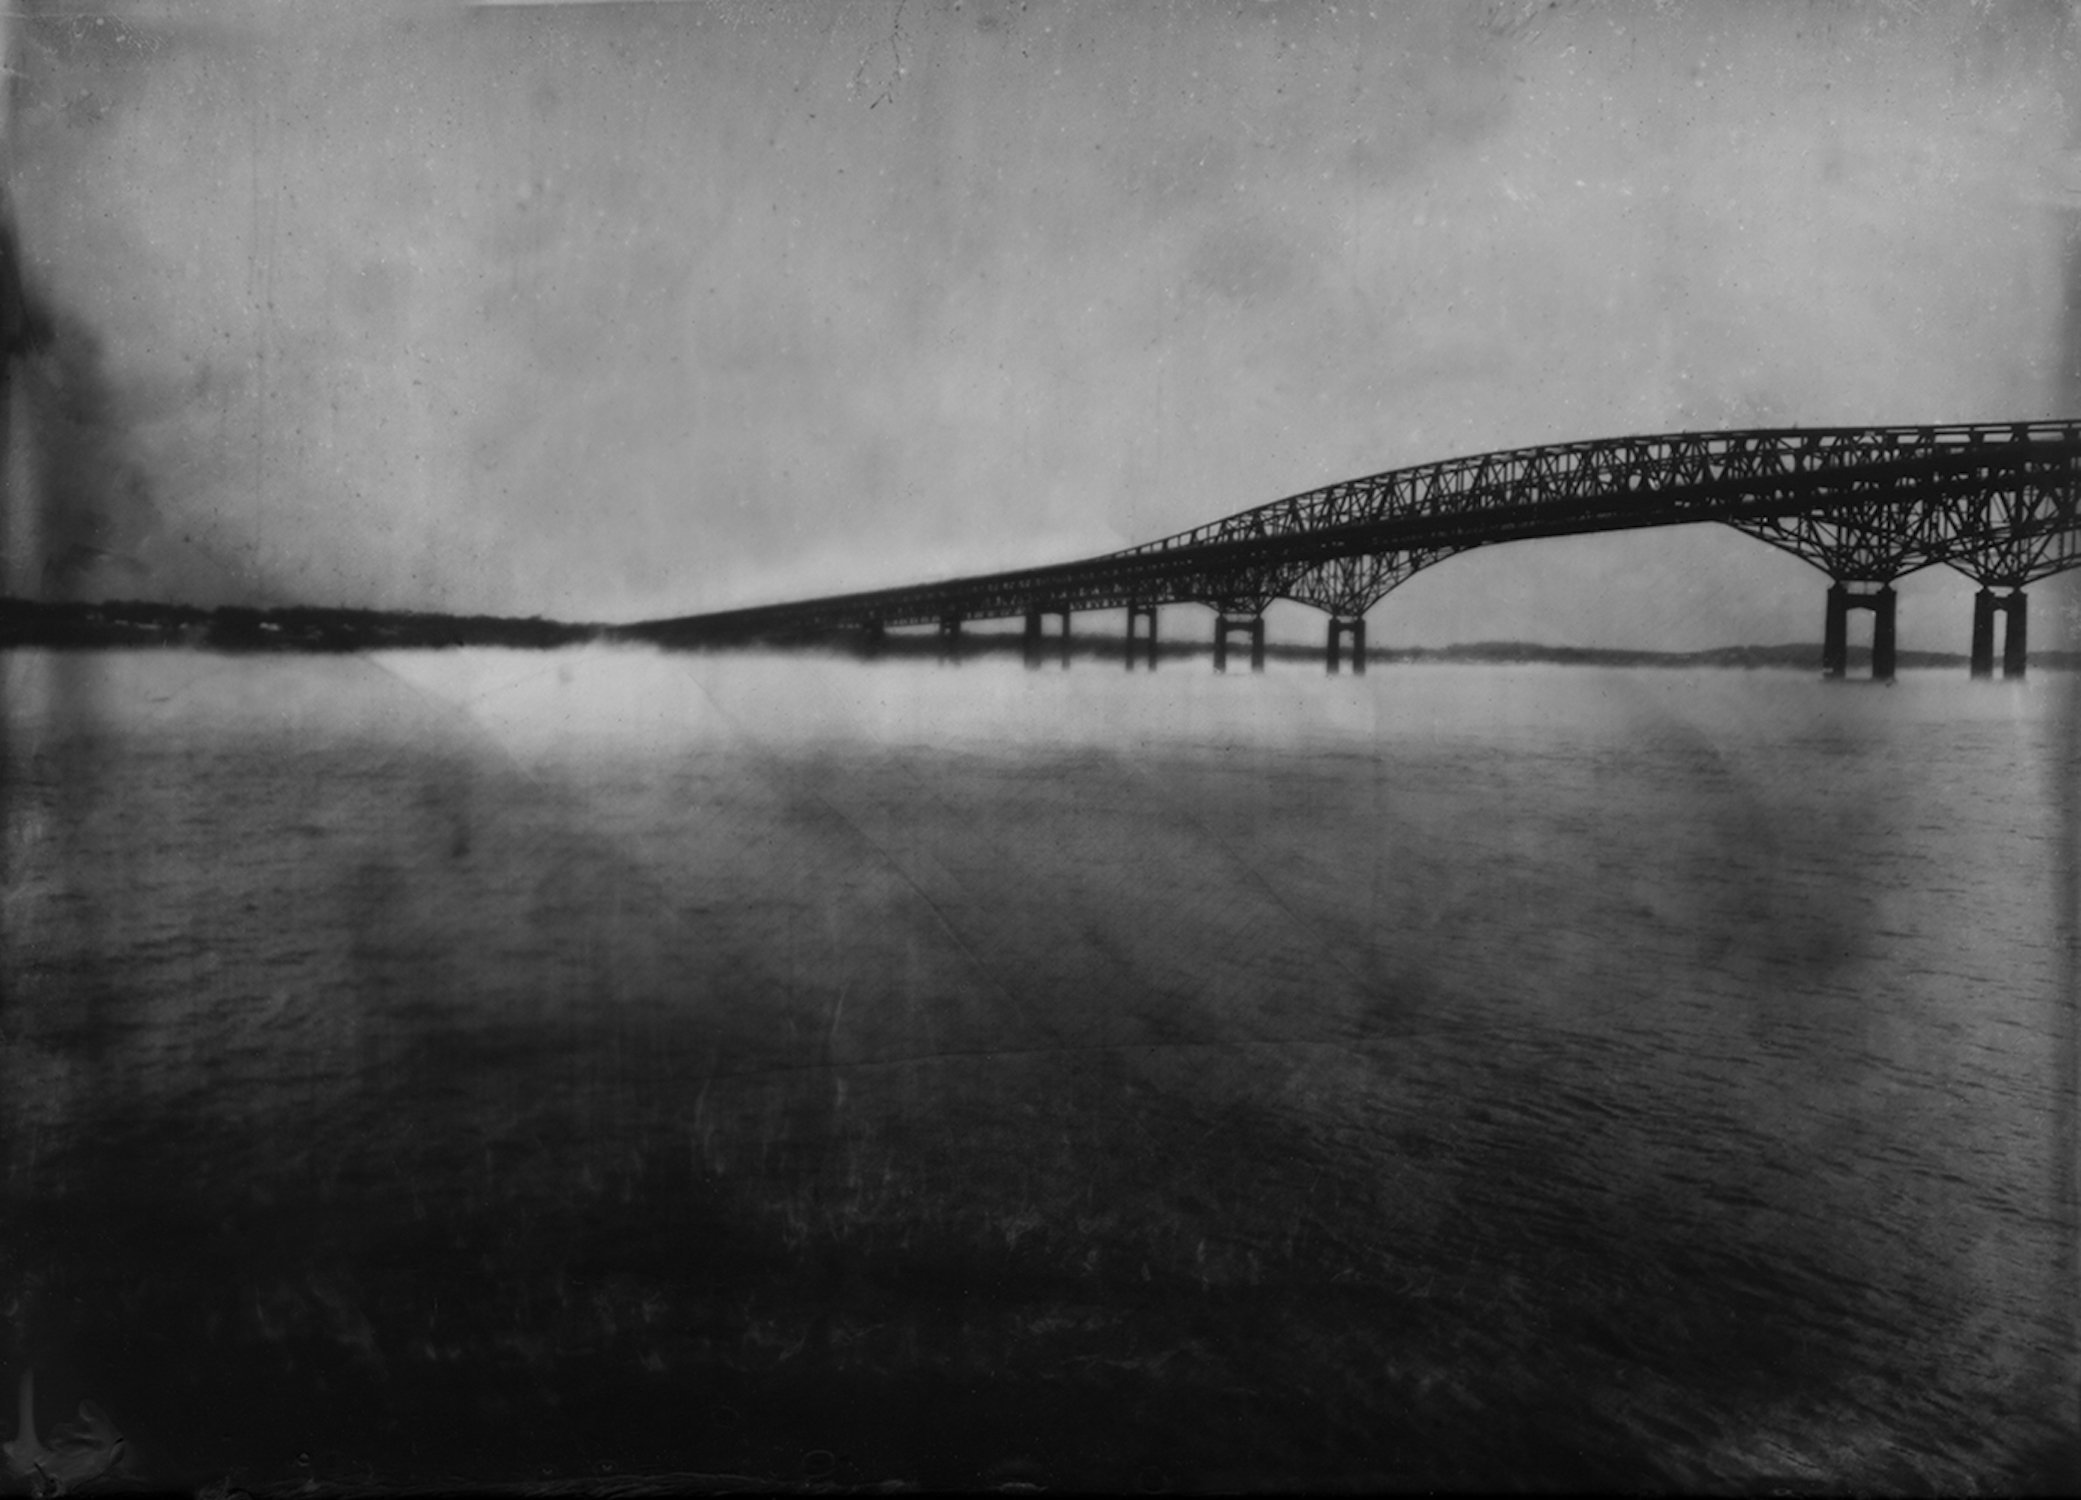 “Newburgh-Beacon Bridge"